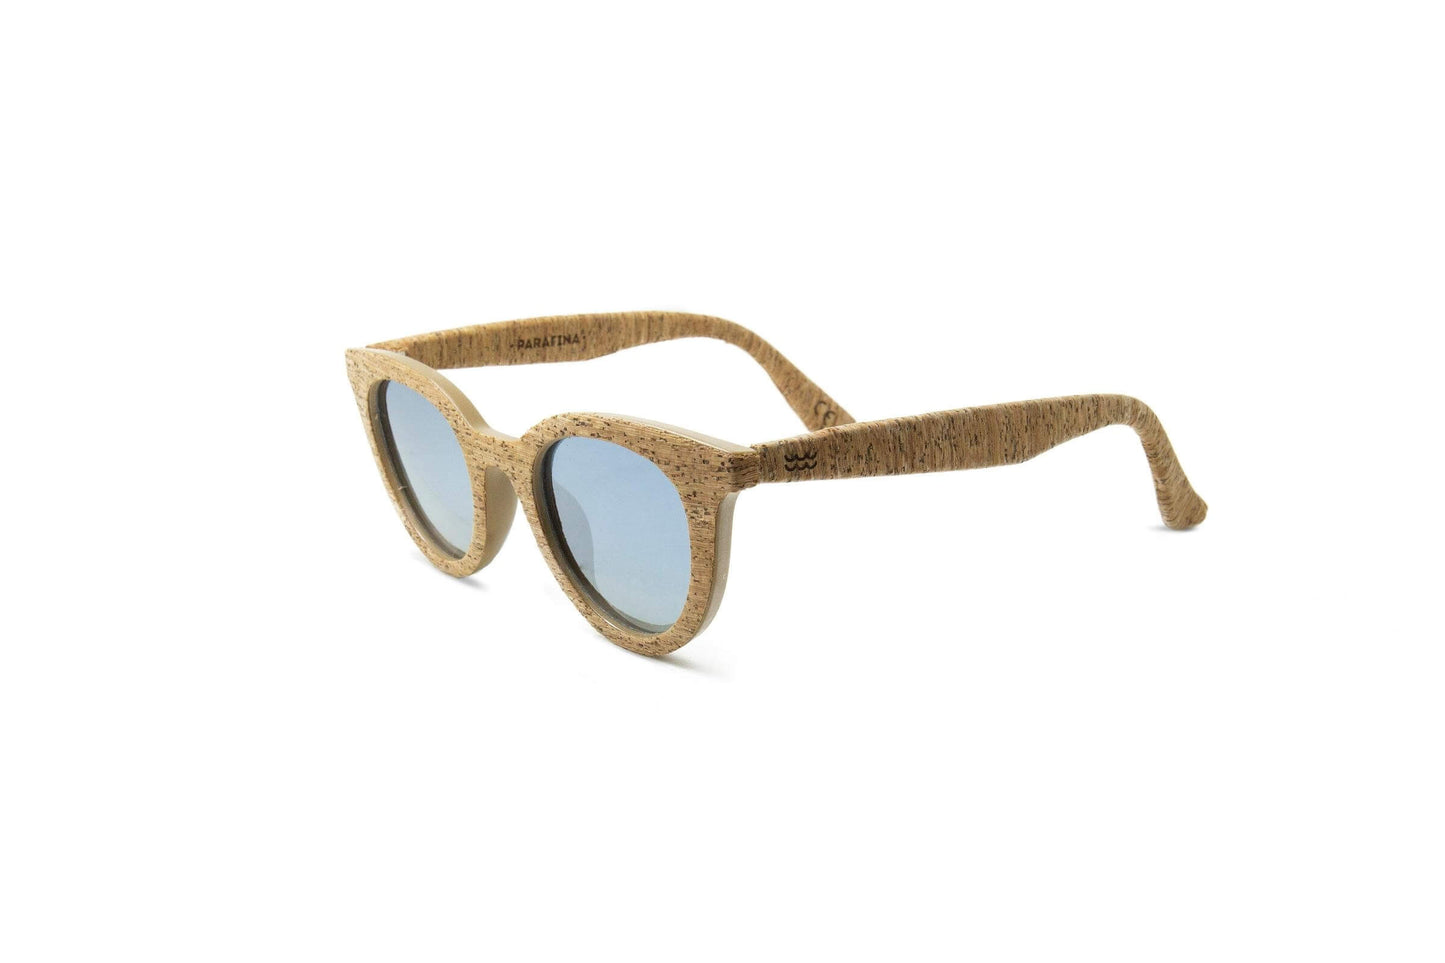 Parafina Lluvia Recycled Cork Sunglasses